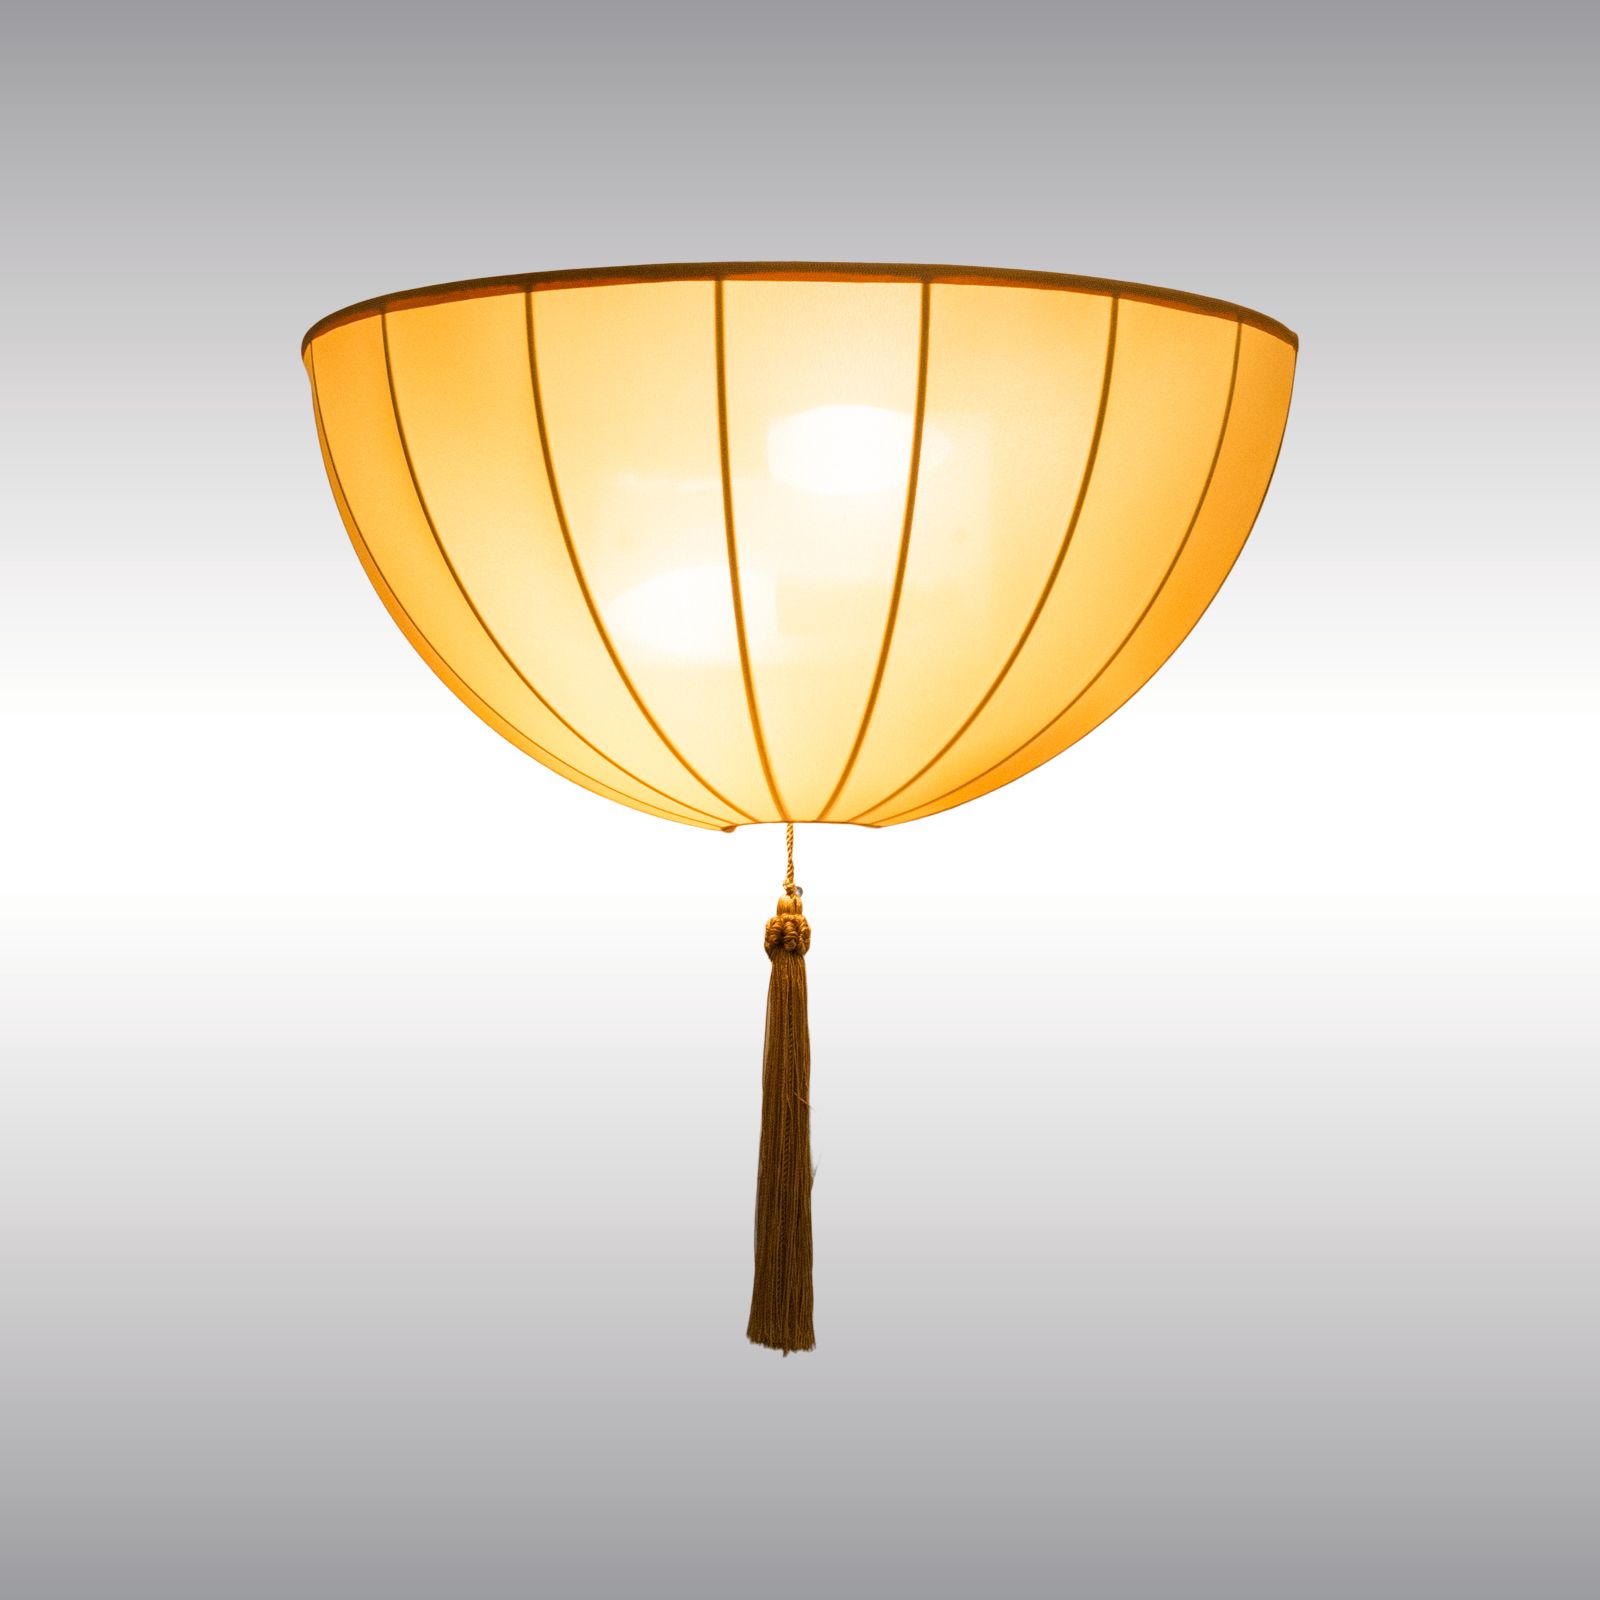 WOKA LAMPS VIENNA - OrderNr.: 22023|Fabric-Department Wall Lamp - Design: WOKA